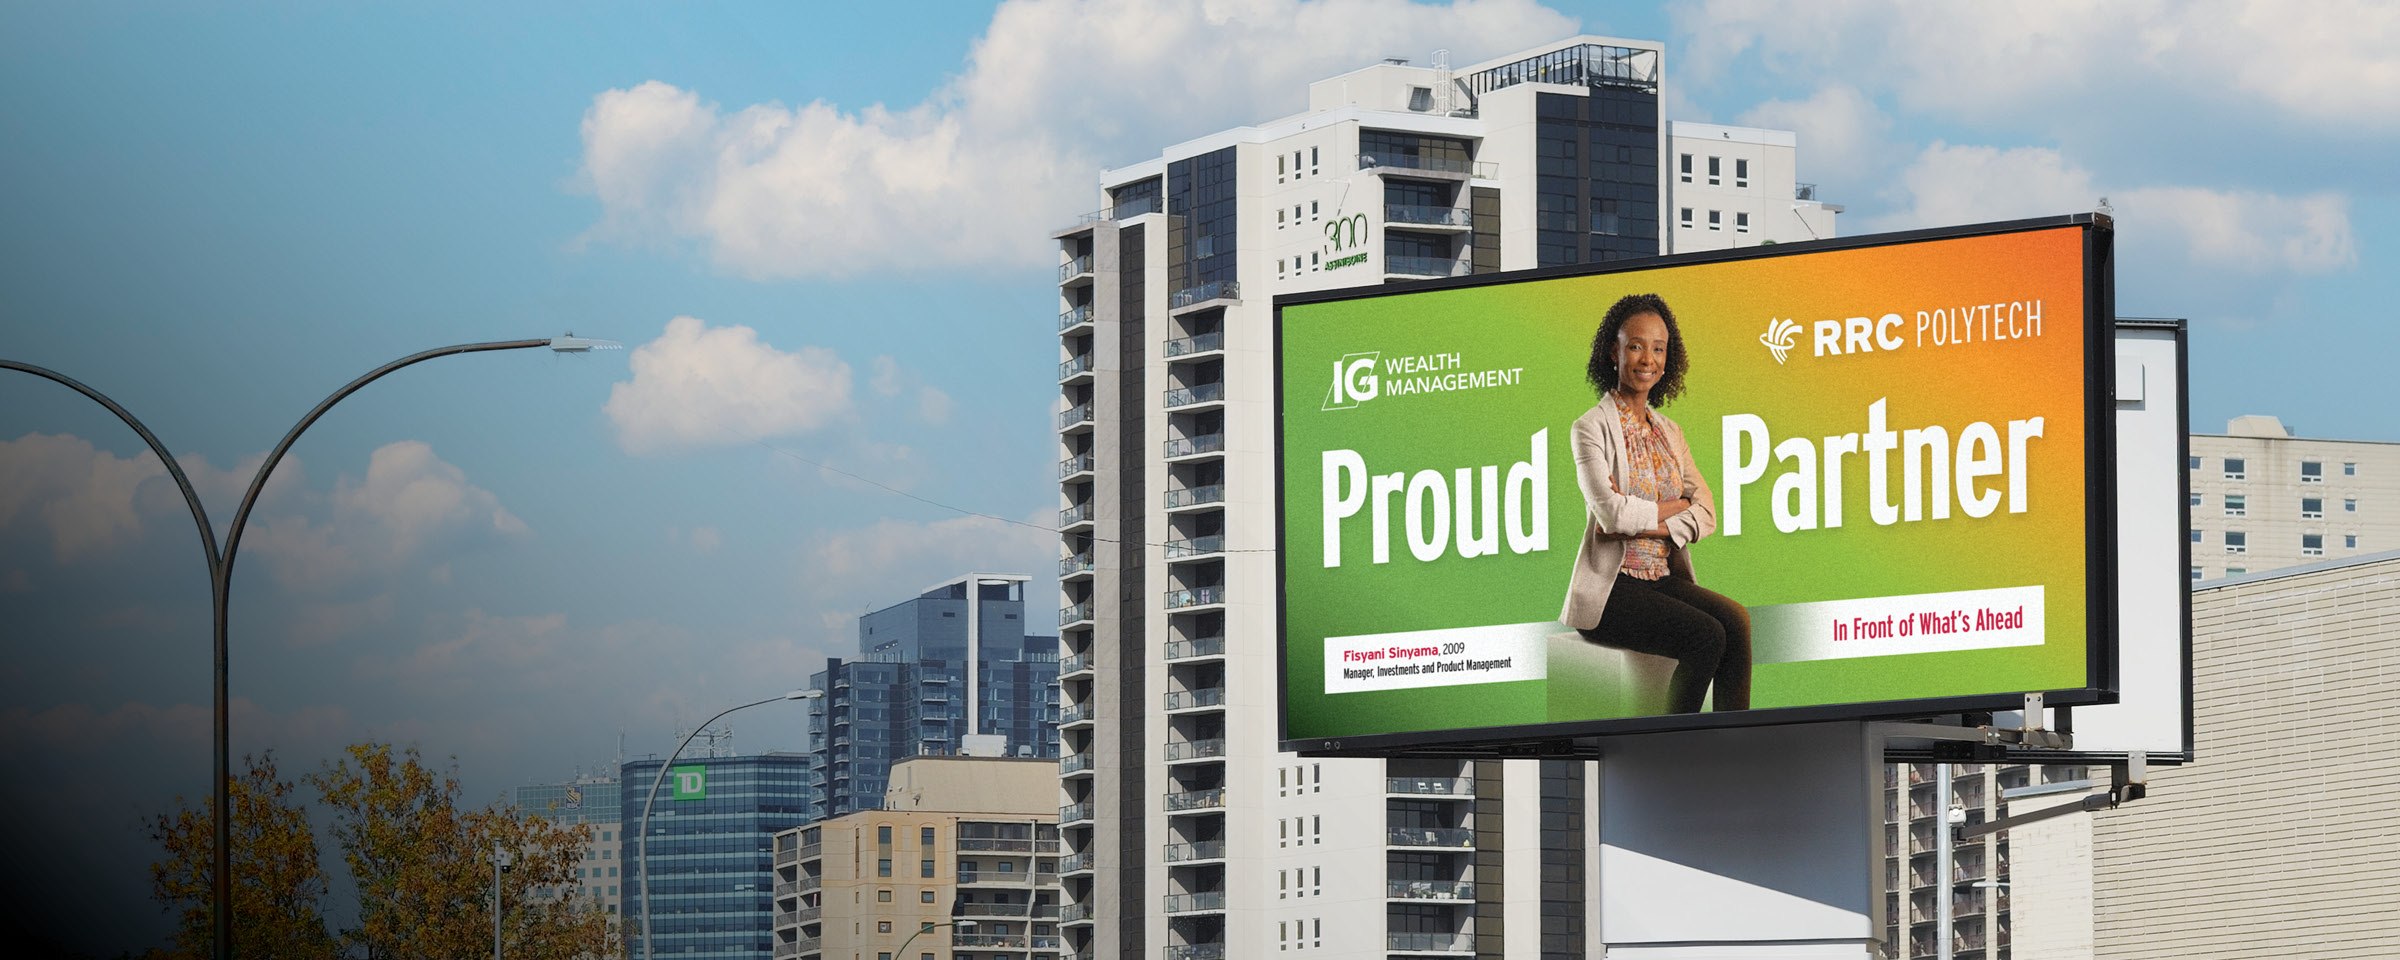 Winnipeg skyline with "Proud Partner" billboard of RRC Polytech graduate Fisyani Sinyama.